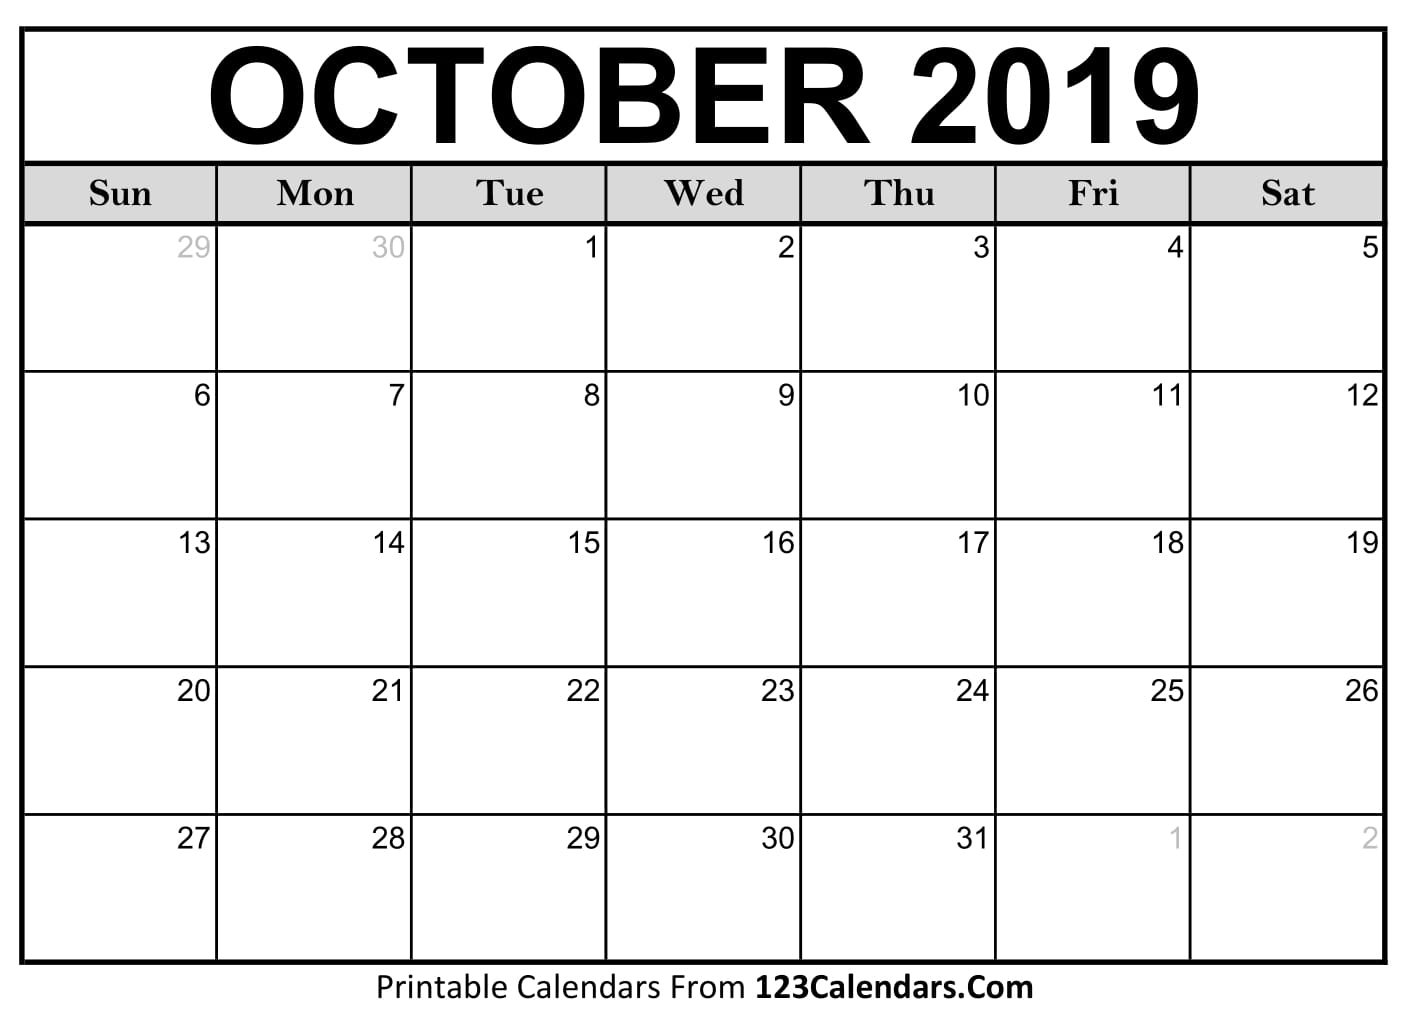 October 2019 Calendar Blank Easily Printable 123Calendars